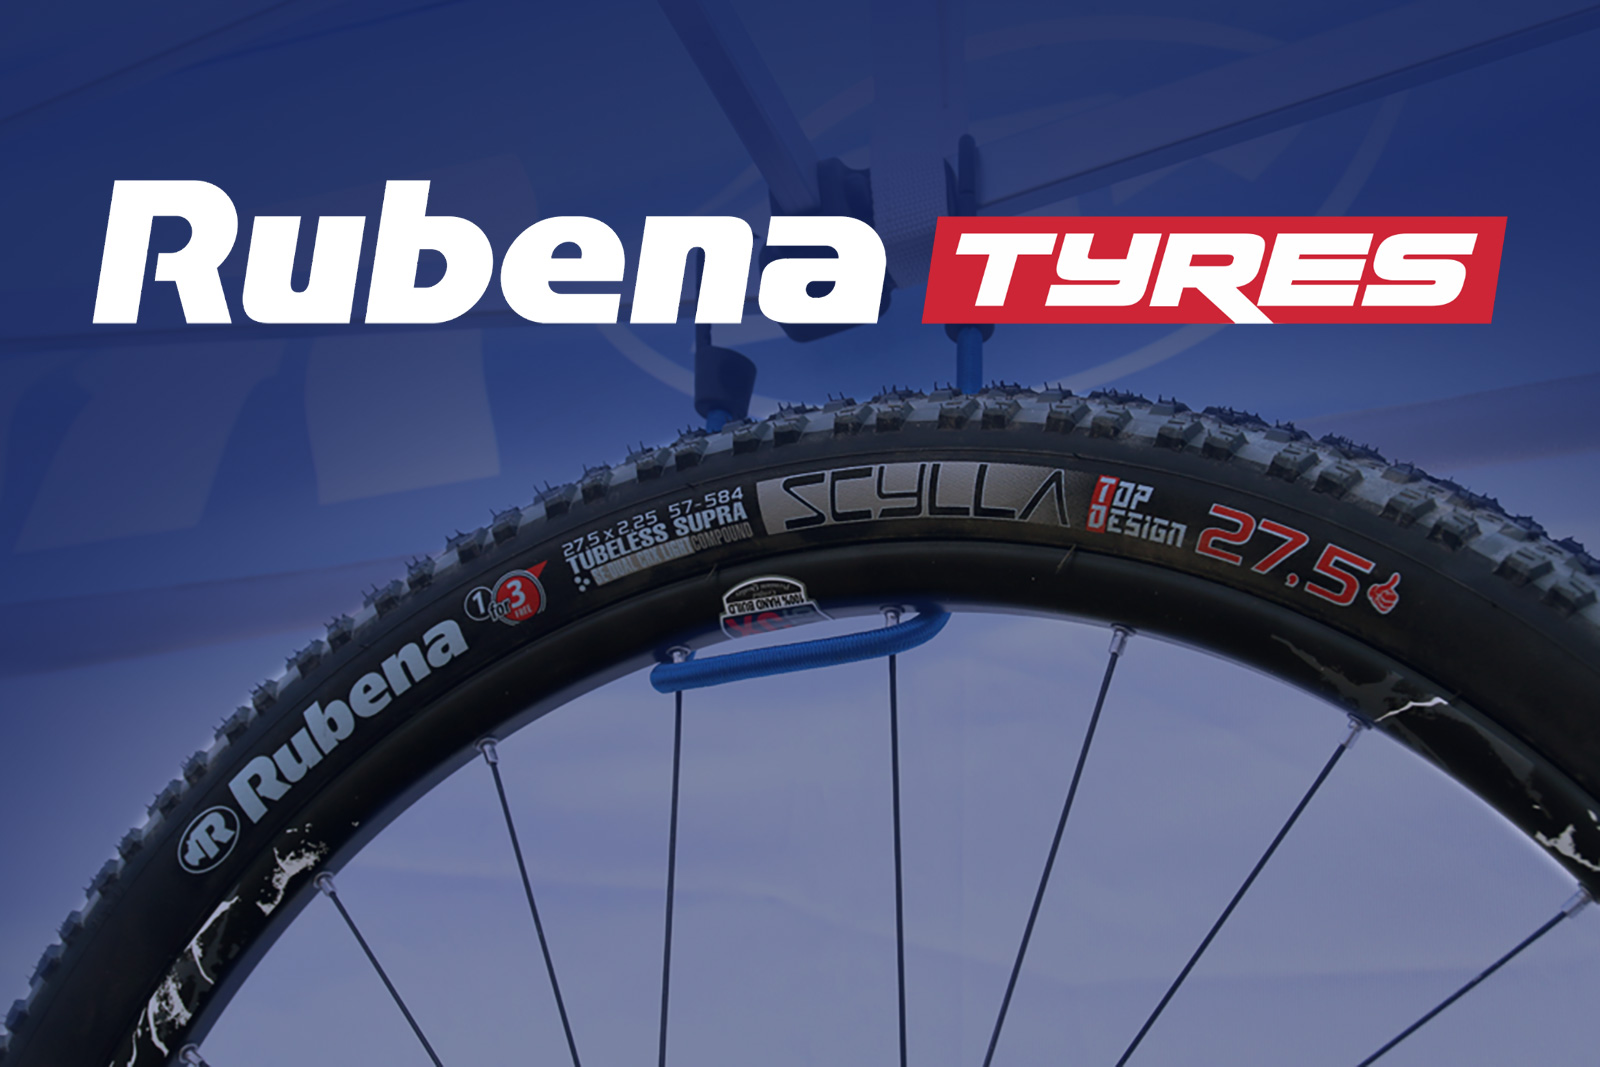 Rubena bike tires return, after 7 years as Mitas tyres